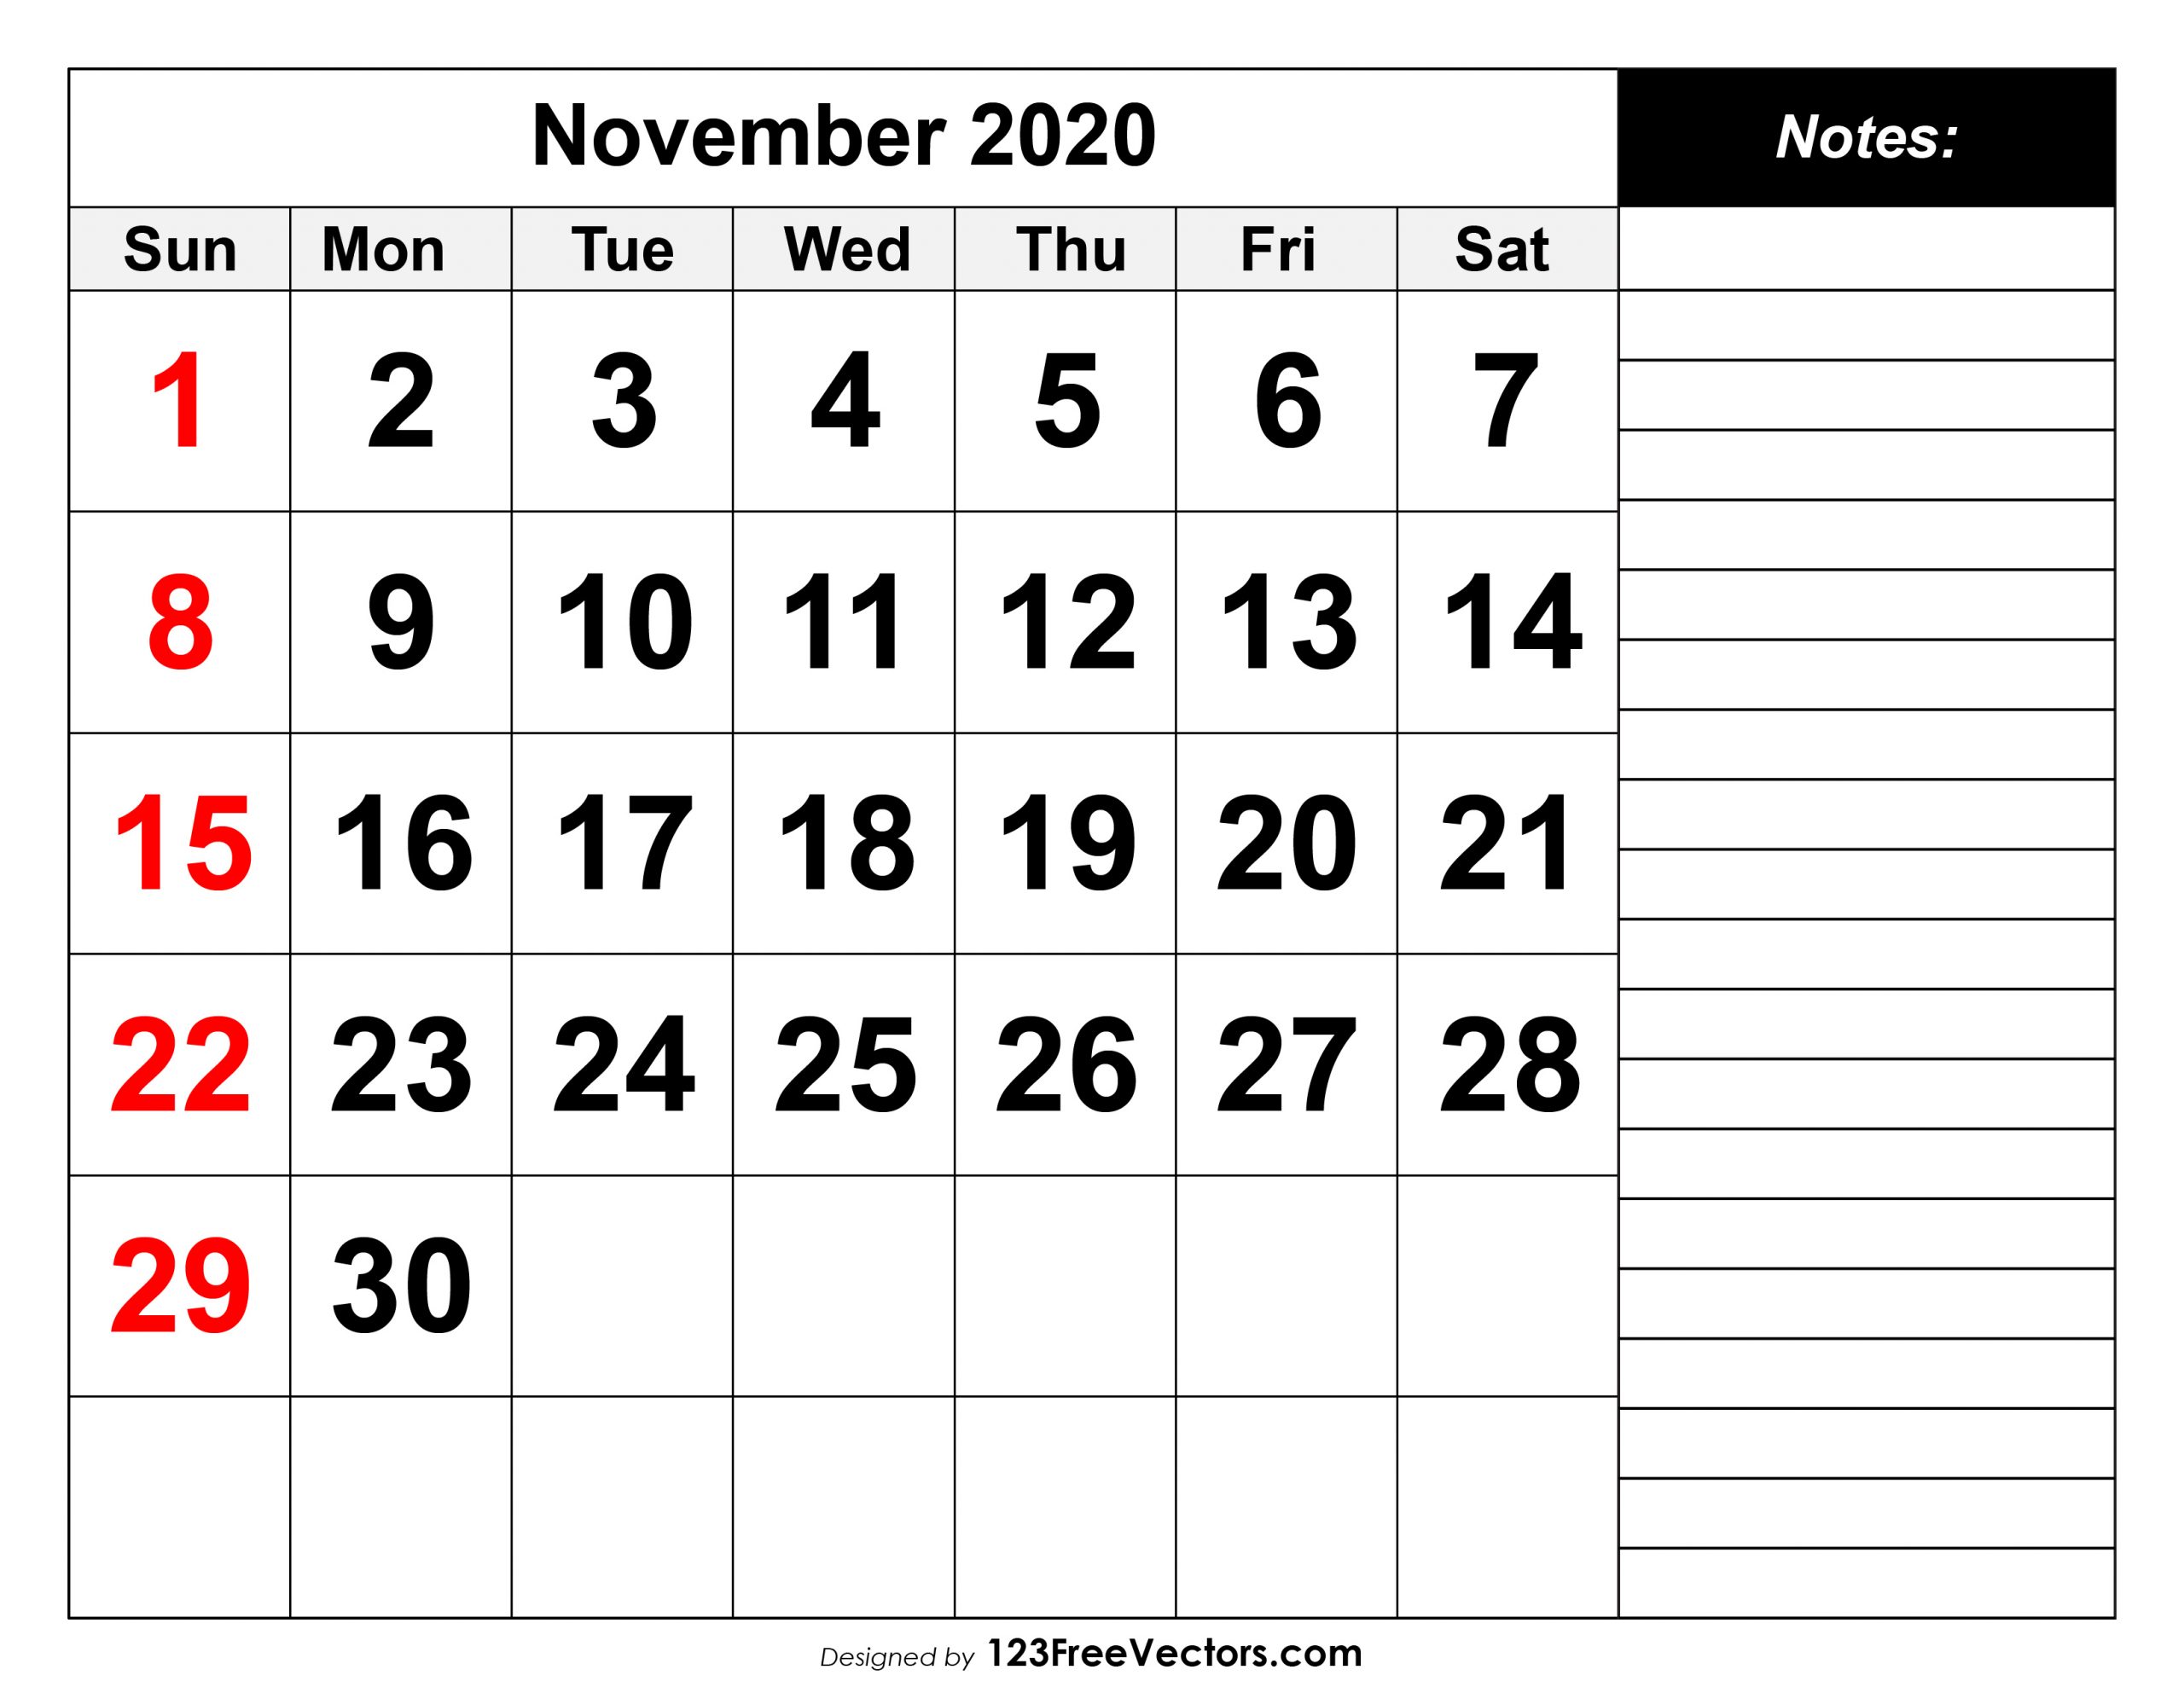 Free November 2020 Printable Calendar Calendar November 2020 To January 2021